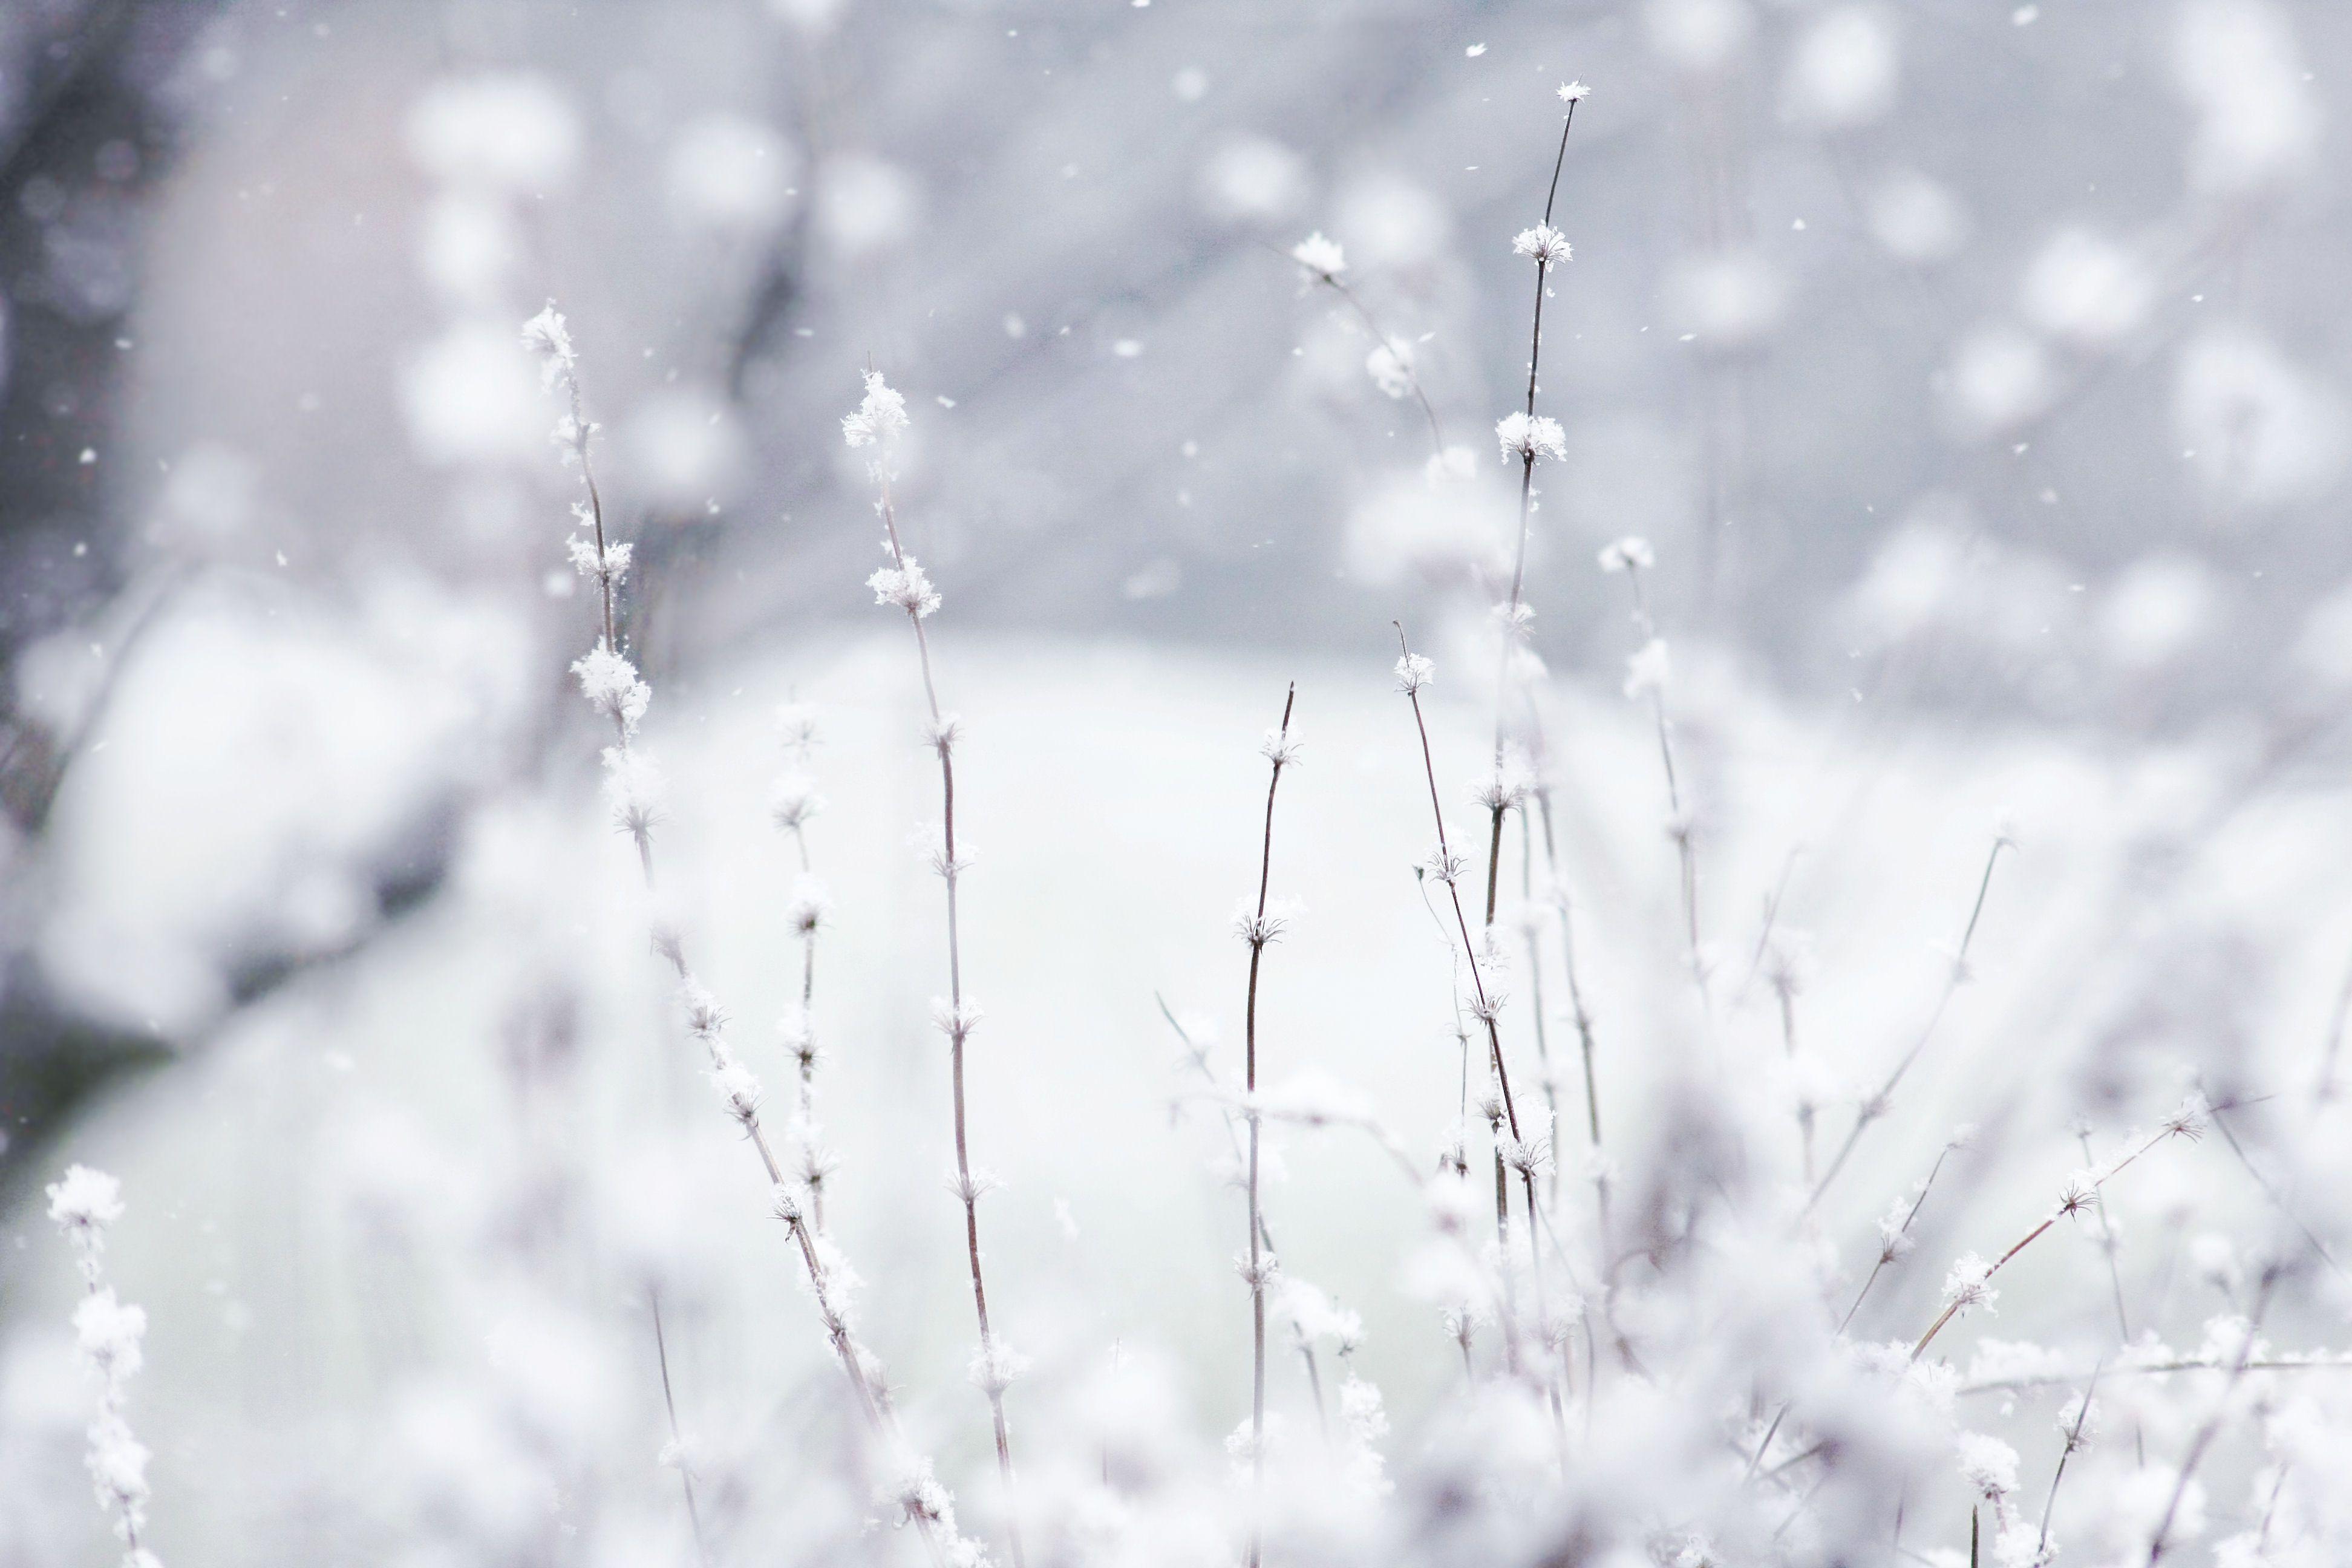 Romantic Winter Winters HD Desktop Background Image, Free